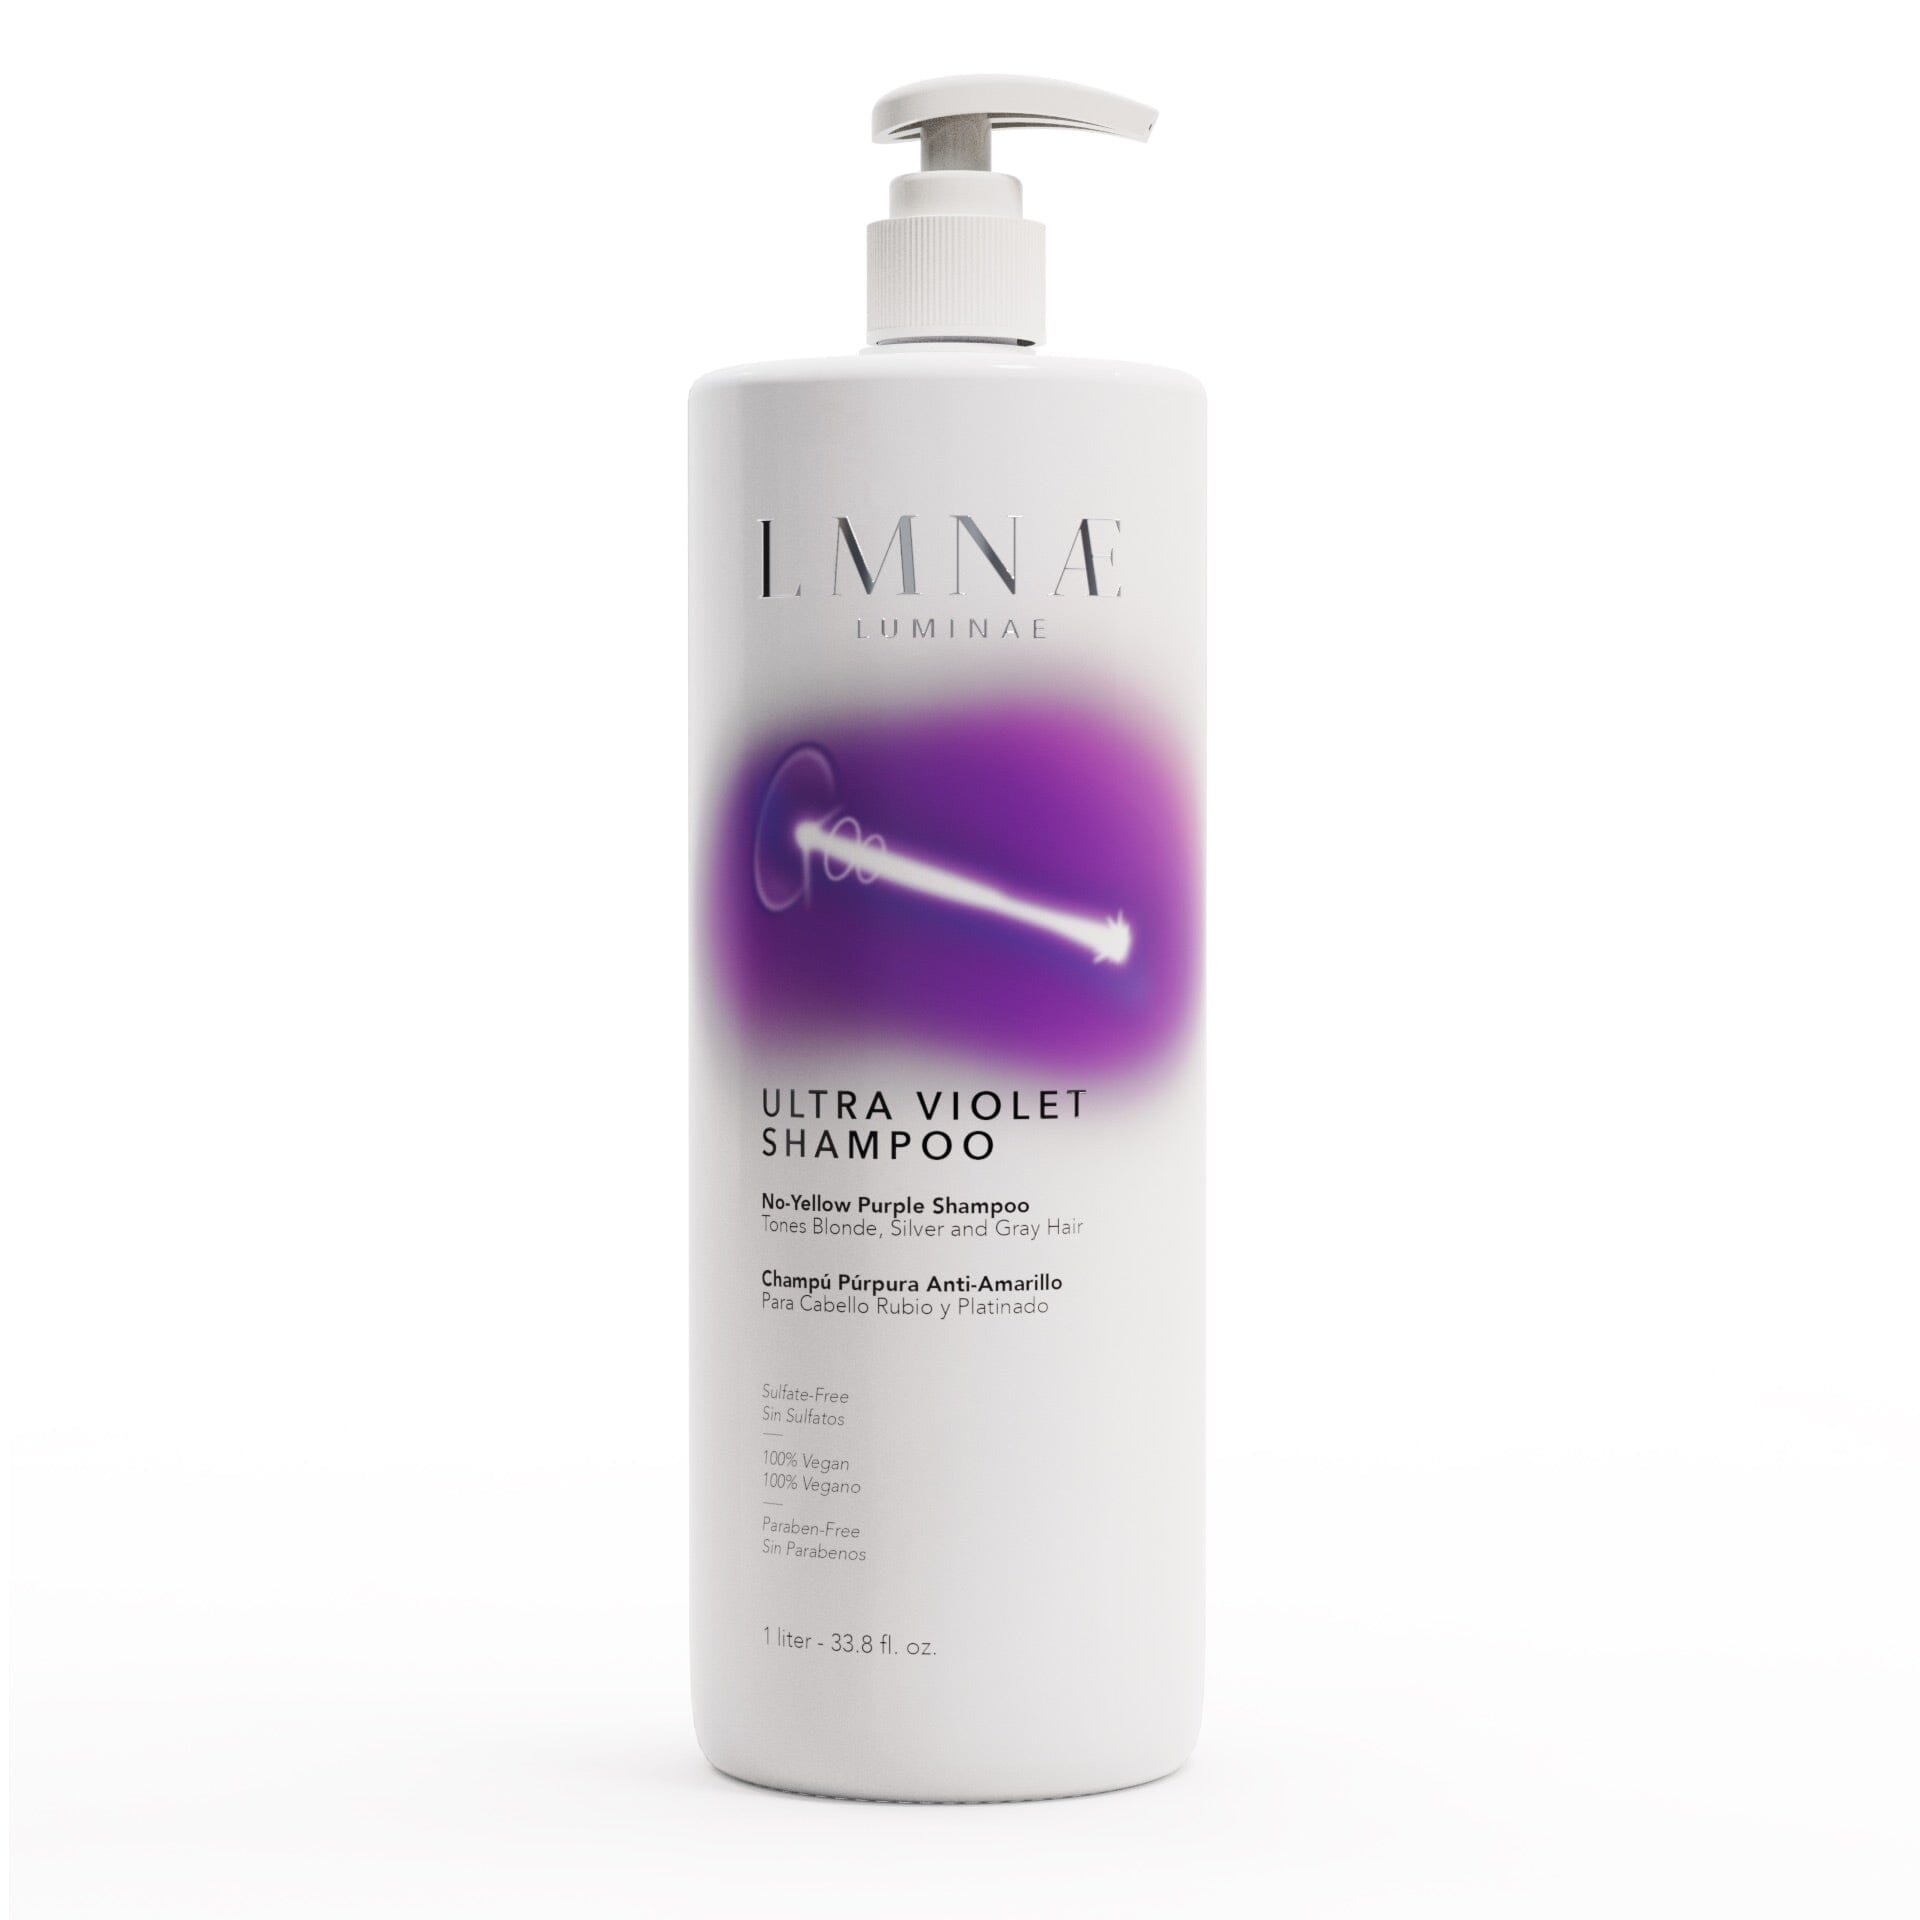 Ultra Violet Shampoo | LUMINAE SHAMPOO LUMINAE 33.8 fl. oz. - 1L 